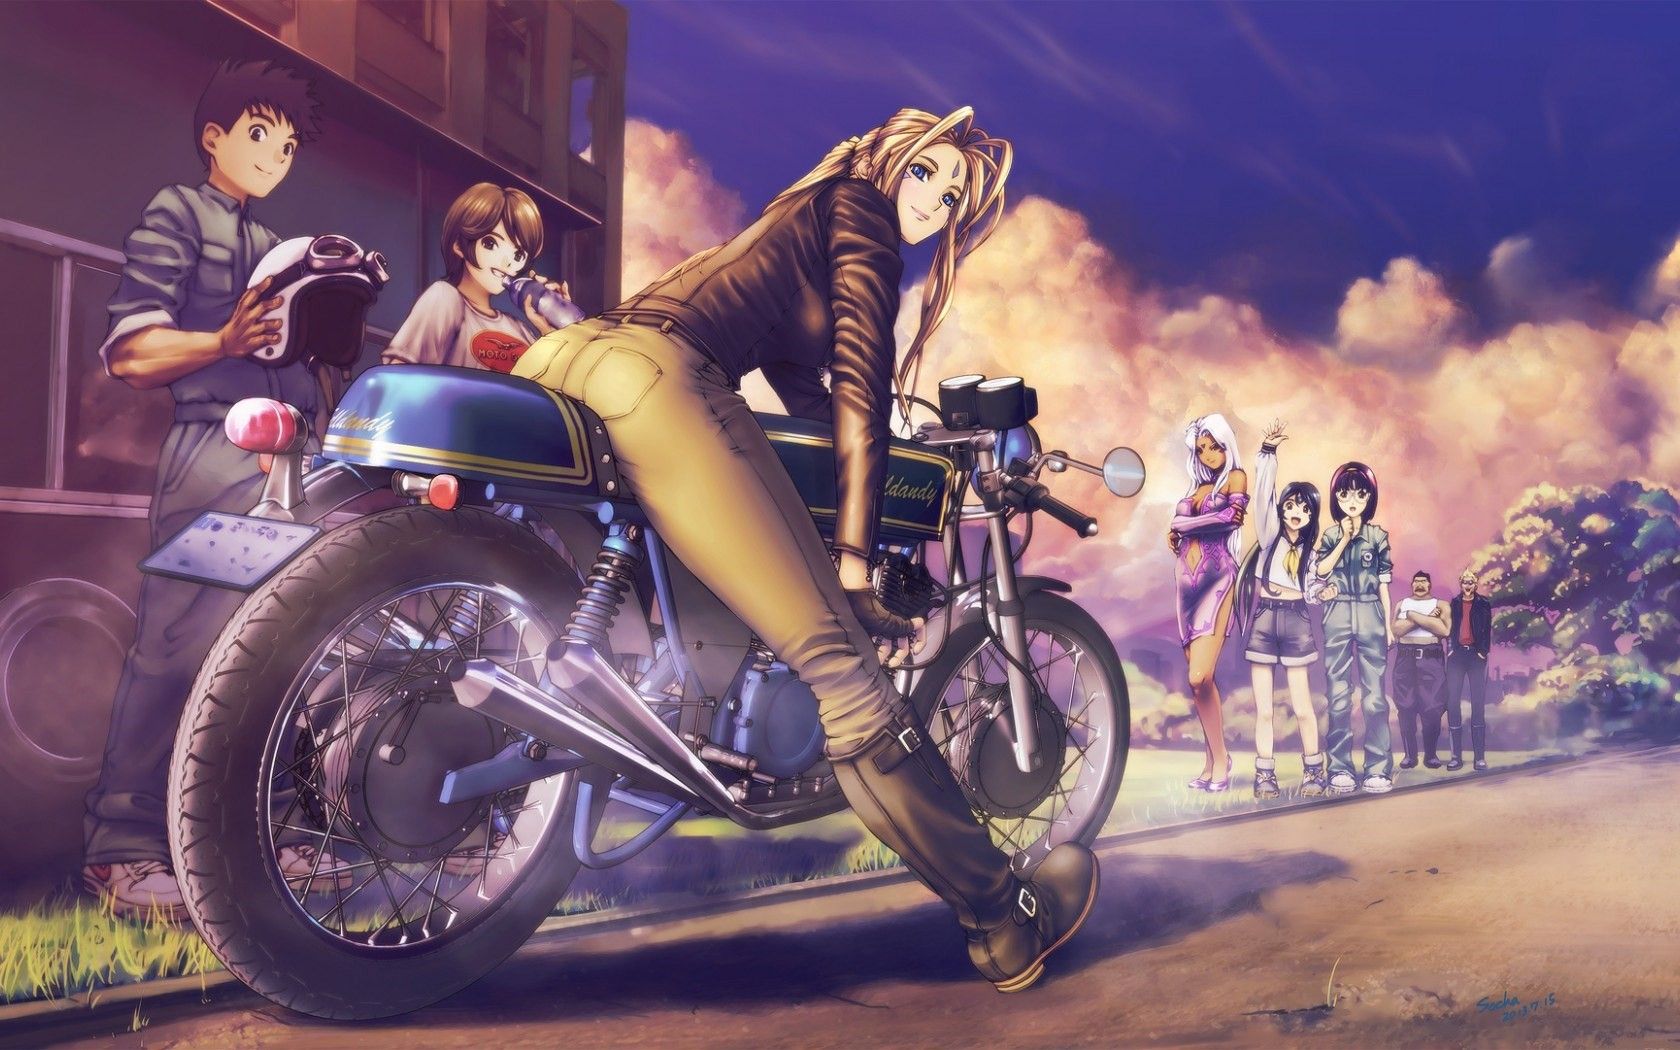 Anime Girl On Bike, HD Anime, 4k Wallpaper, Image, Background